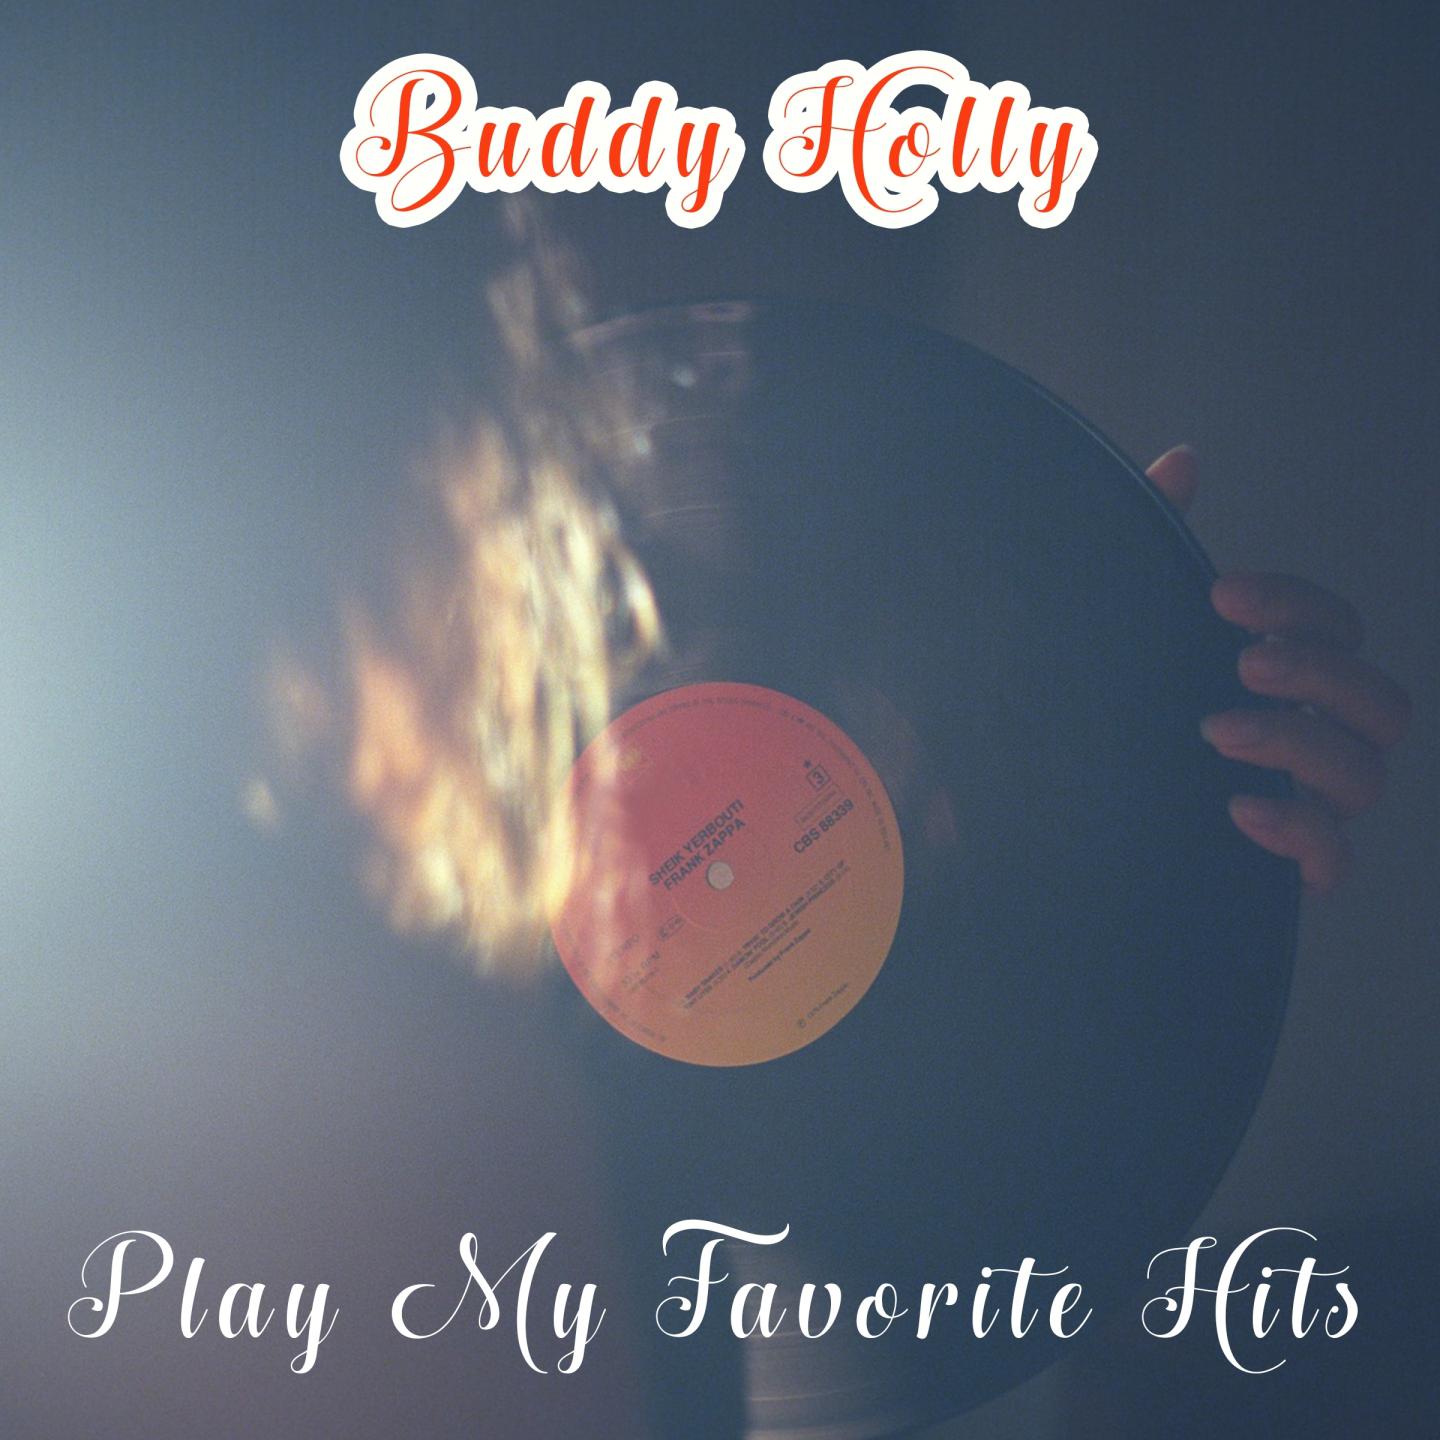 Play My Favorite Hits